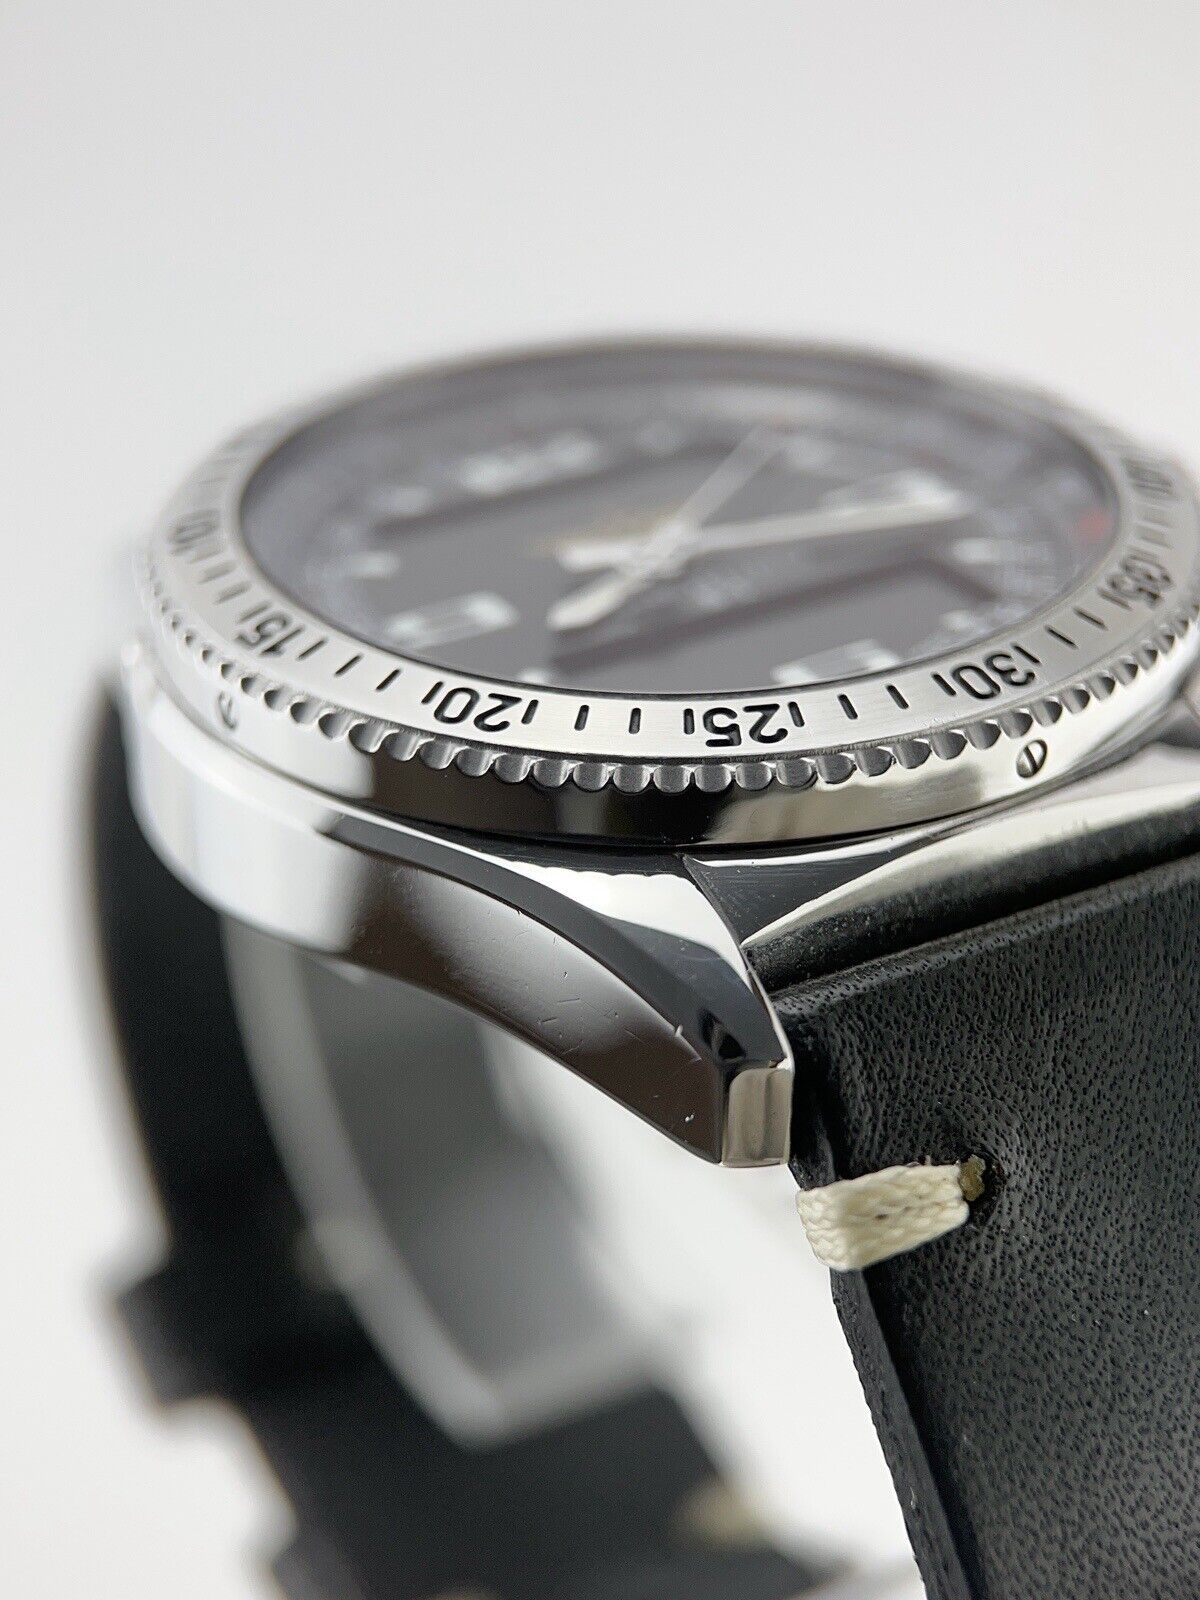 Breitling B-1 Steel Black 41mm Quartz Digital Movement Men’s Watch A68362